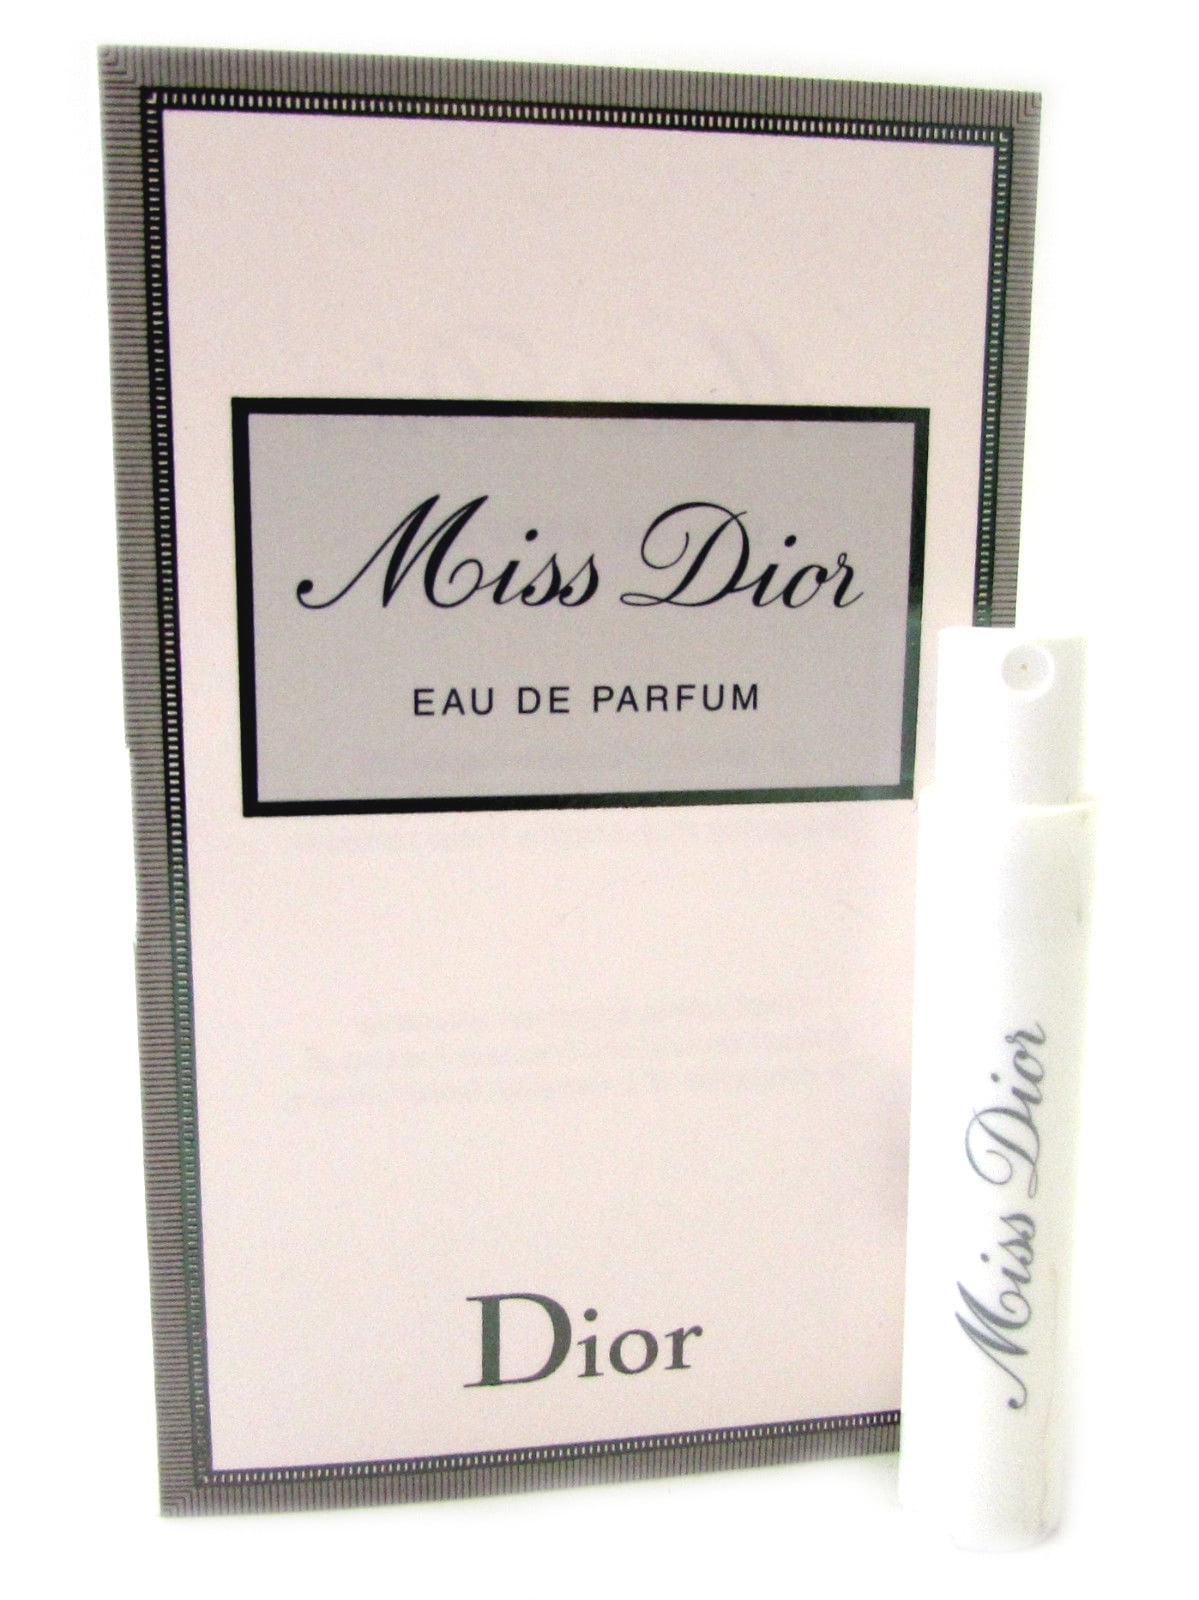 Dior Miss Dior Eau de Parfum Travel Vial - Walmart.com